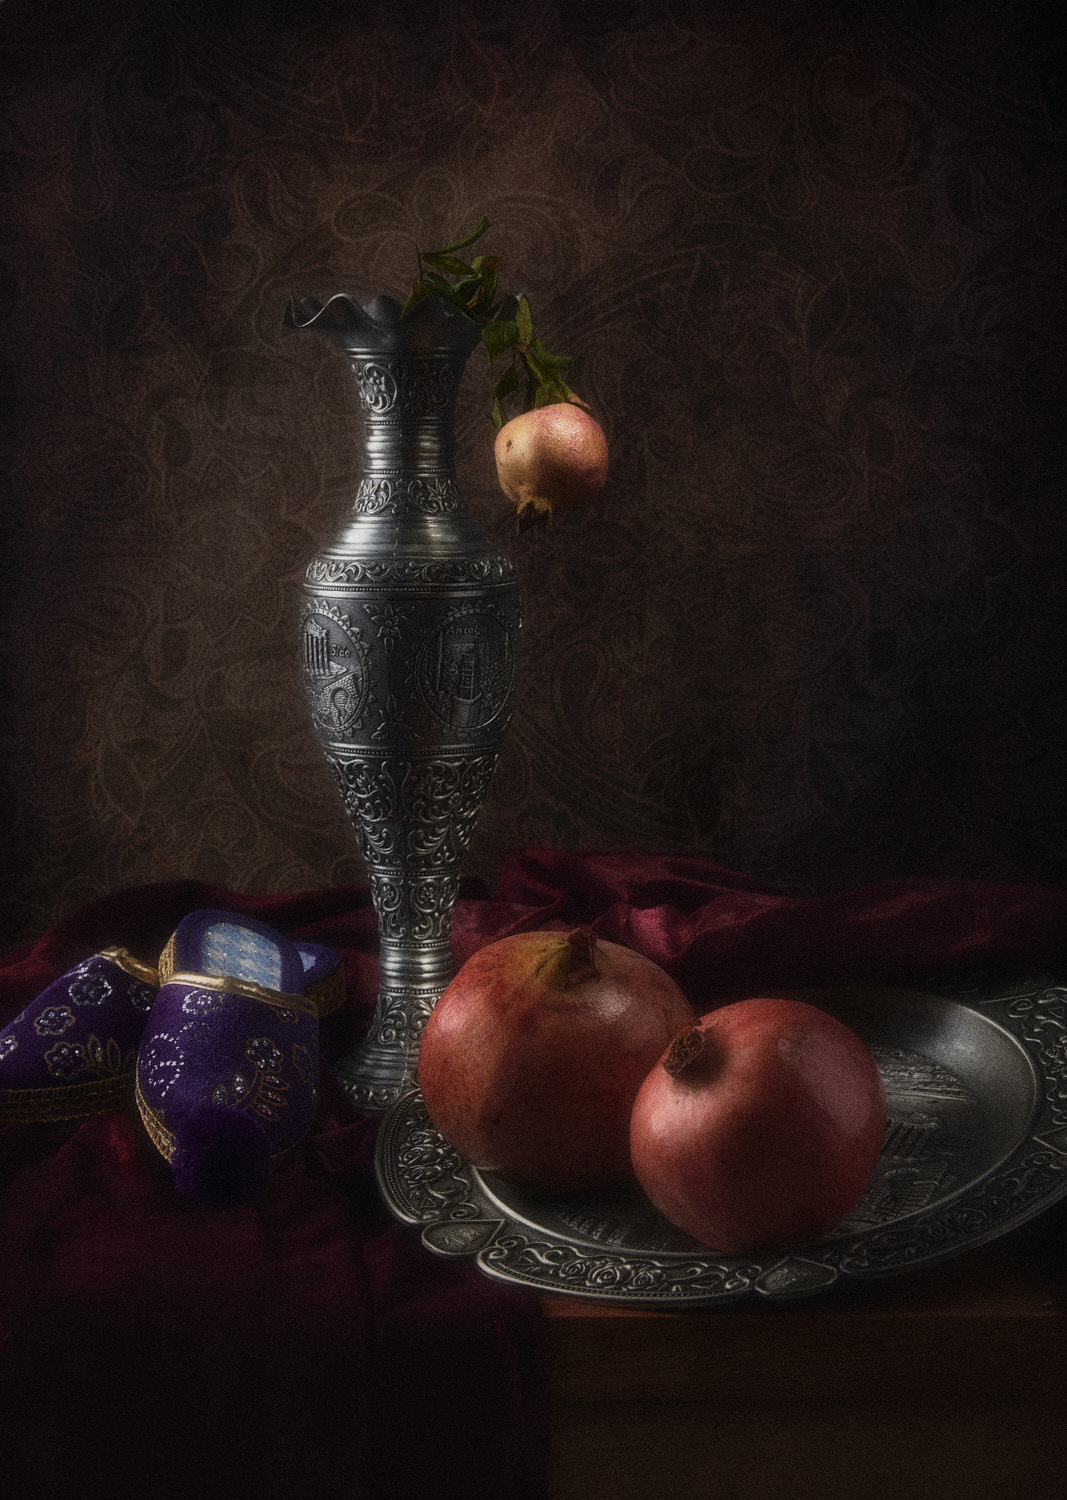 Турецкие мотивы натюрморт композиция постановка сцена плоды еда фрукты гранат кувшин посуда